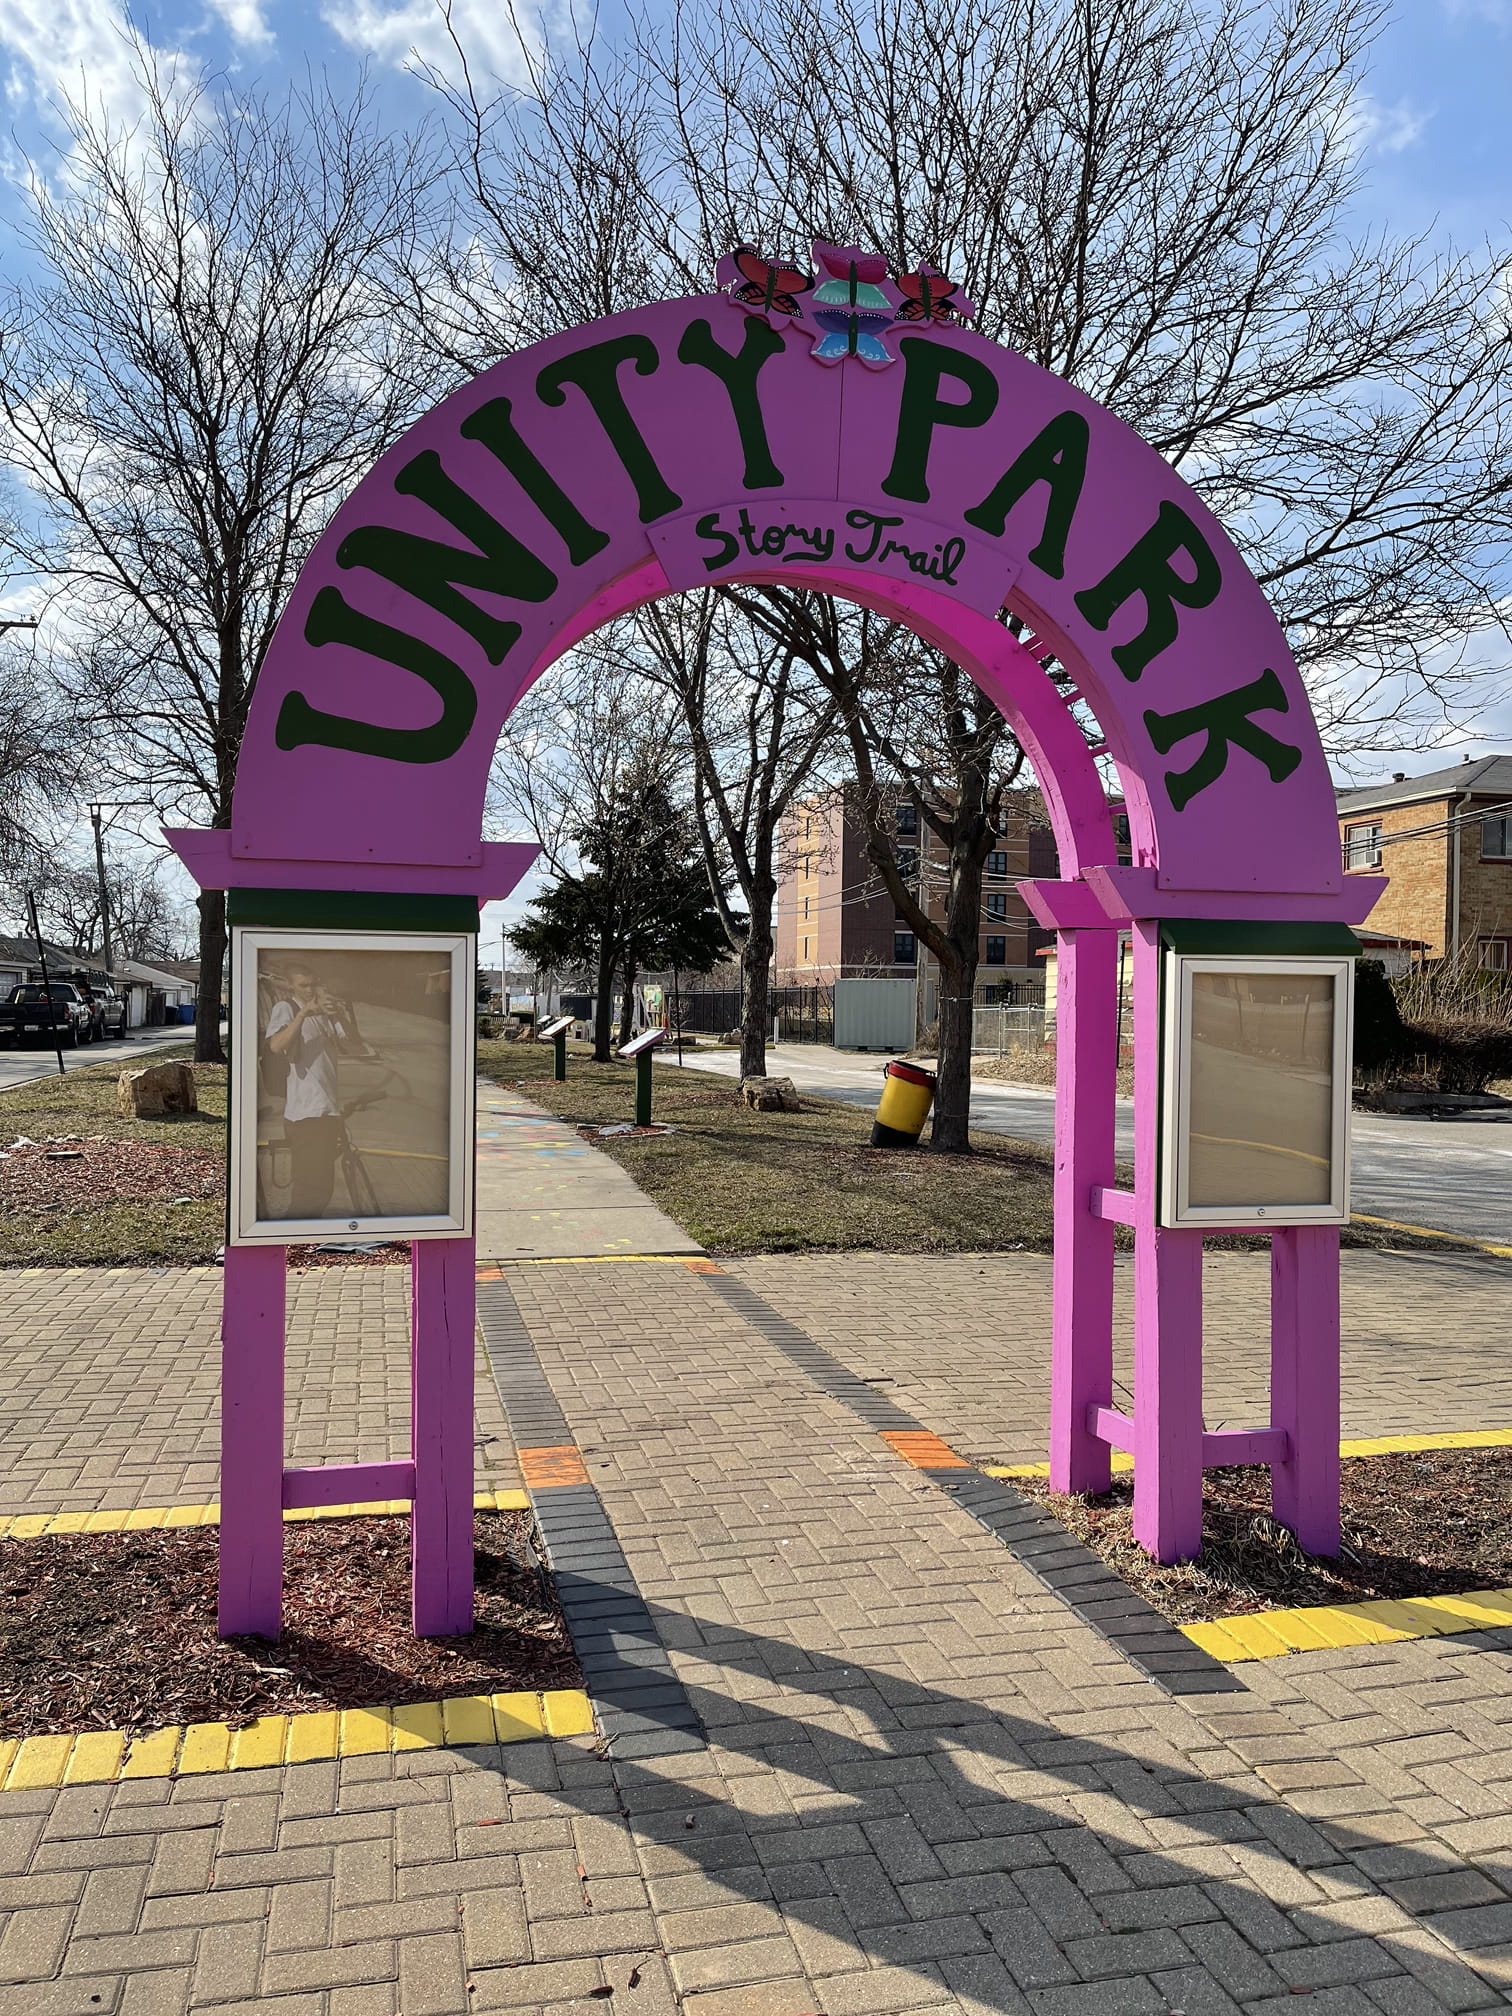 Unity park story trail